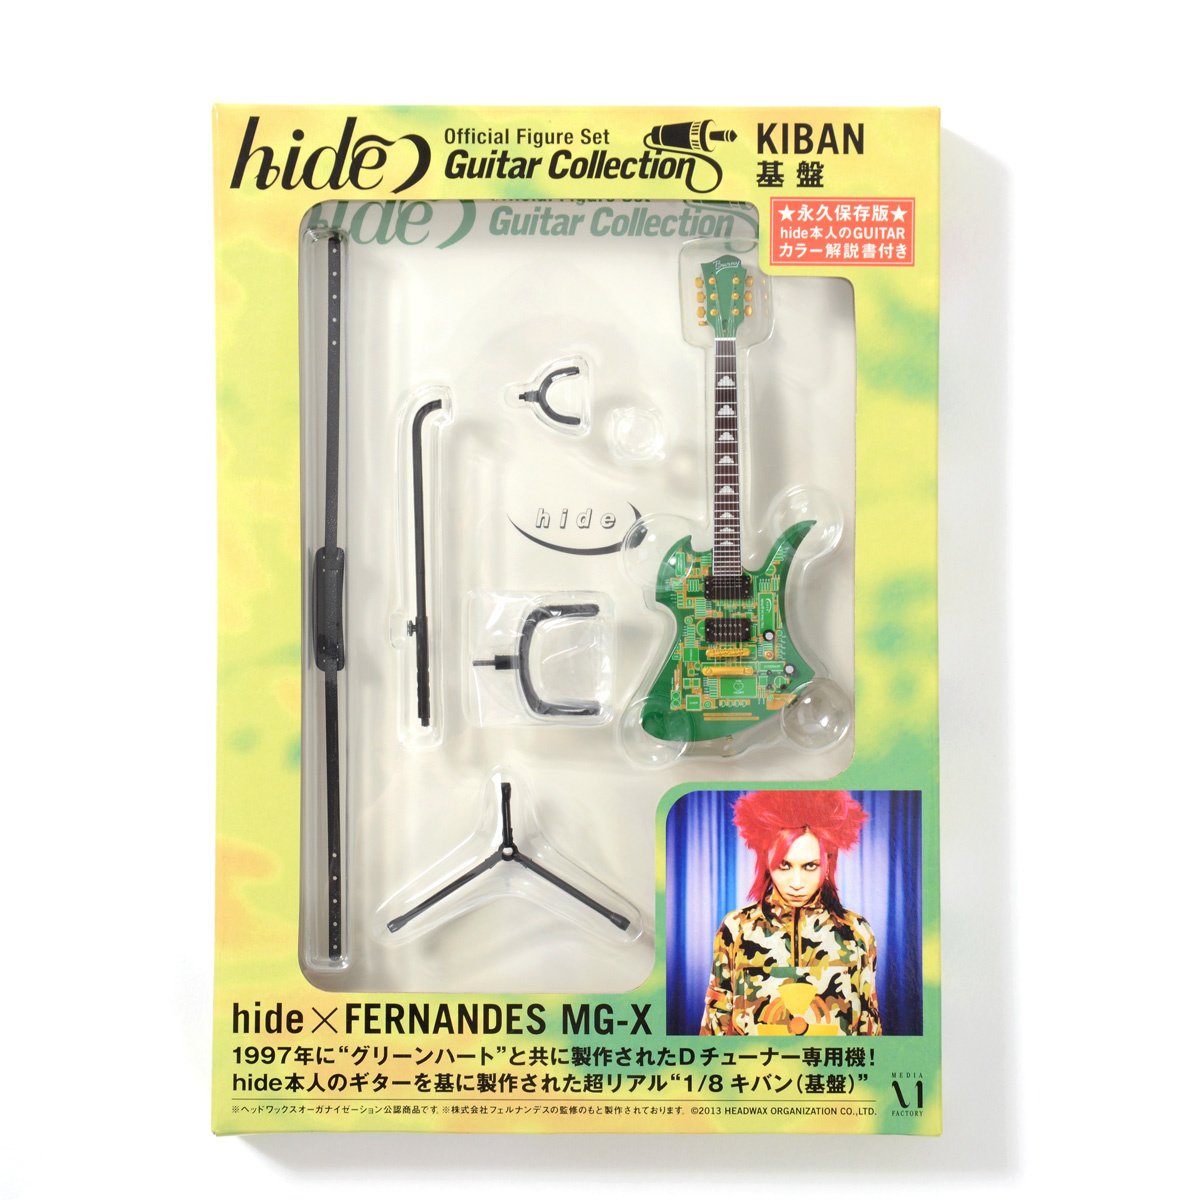 hide Guitar Collection Official Figure Set: KIBAN Ver.